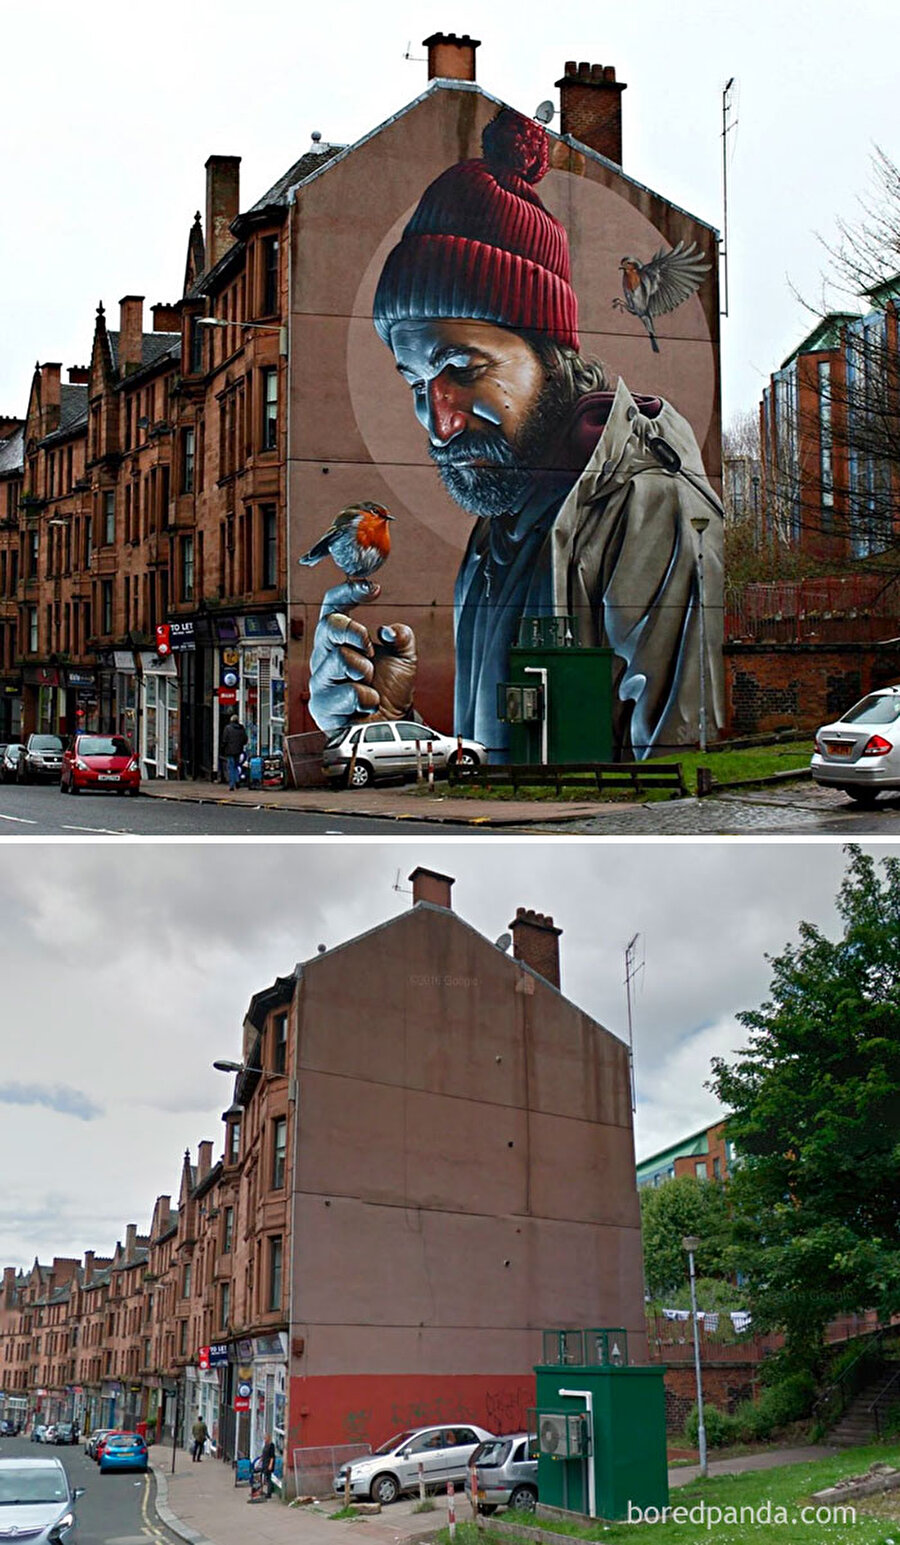 Photorealistic Mural, Glasgow, İskoçya

                                    
                                    
                                    
                                
                                
                                